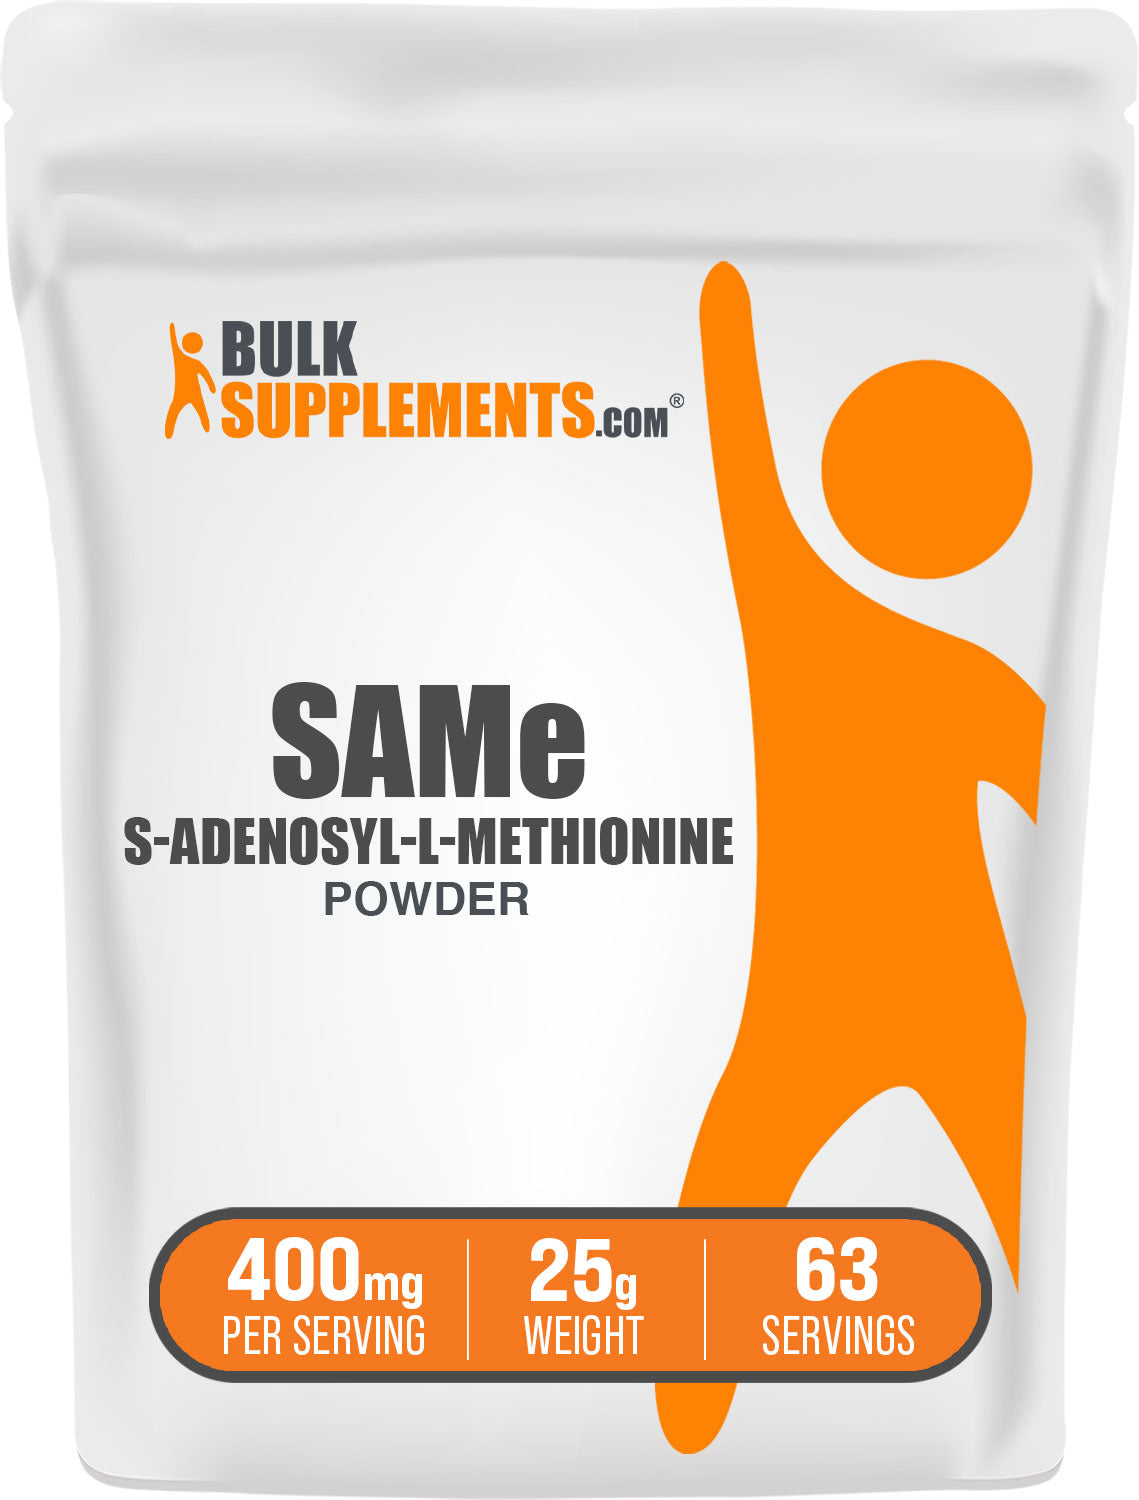 SAMe supplement powder 25g main bag image